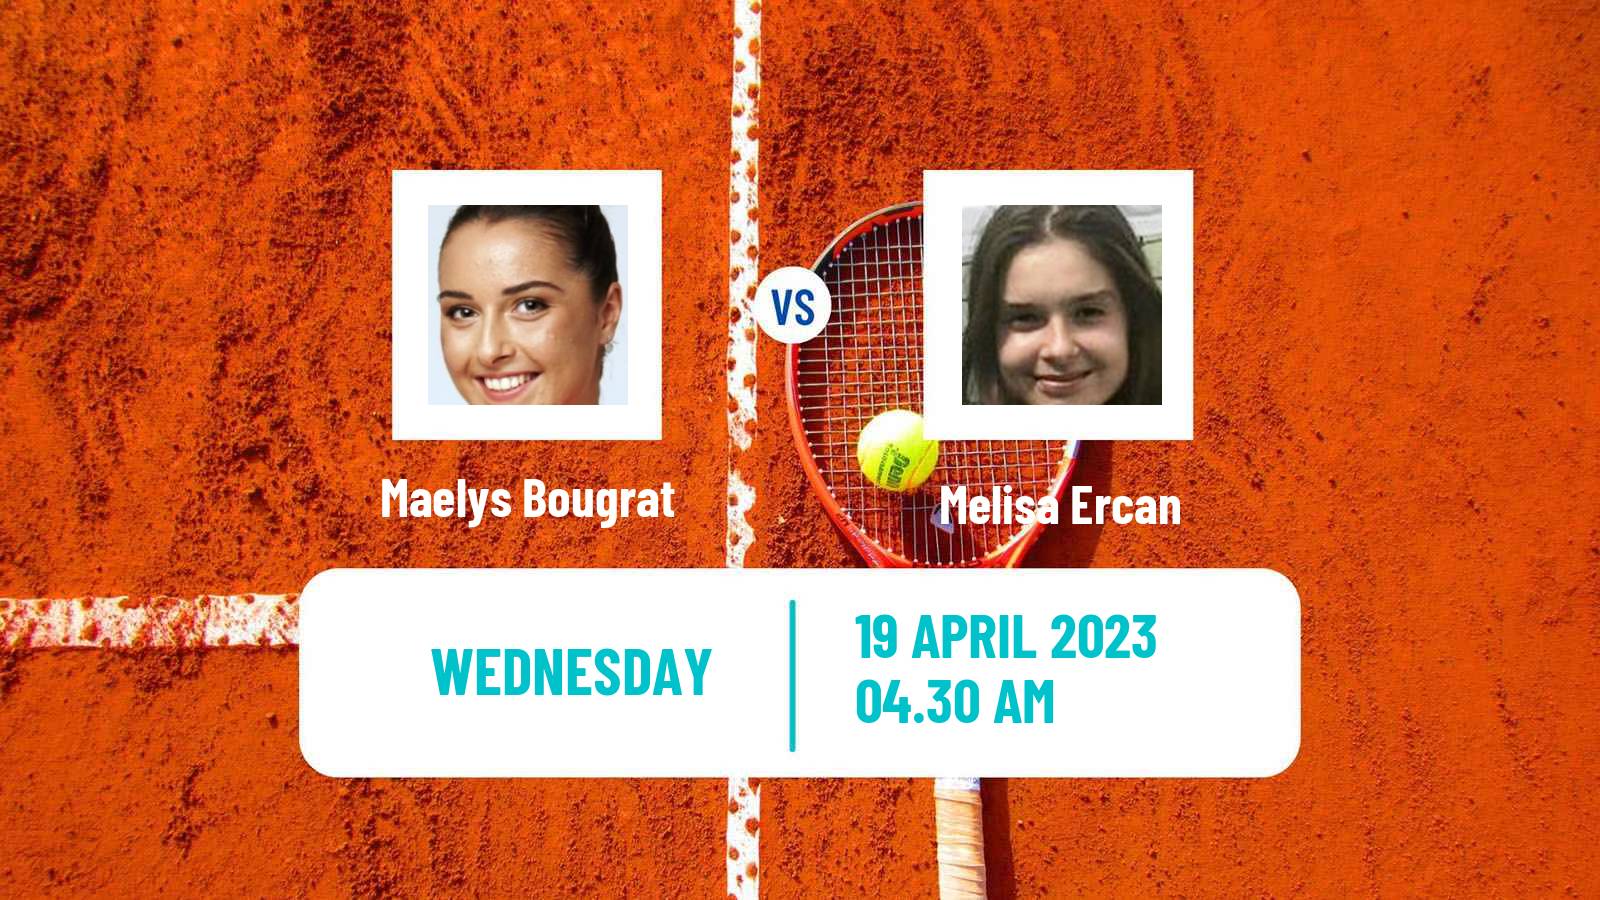 Tennis ITF Tournaments Maelys Bougrat - Melisa Ercan